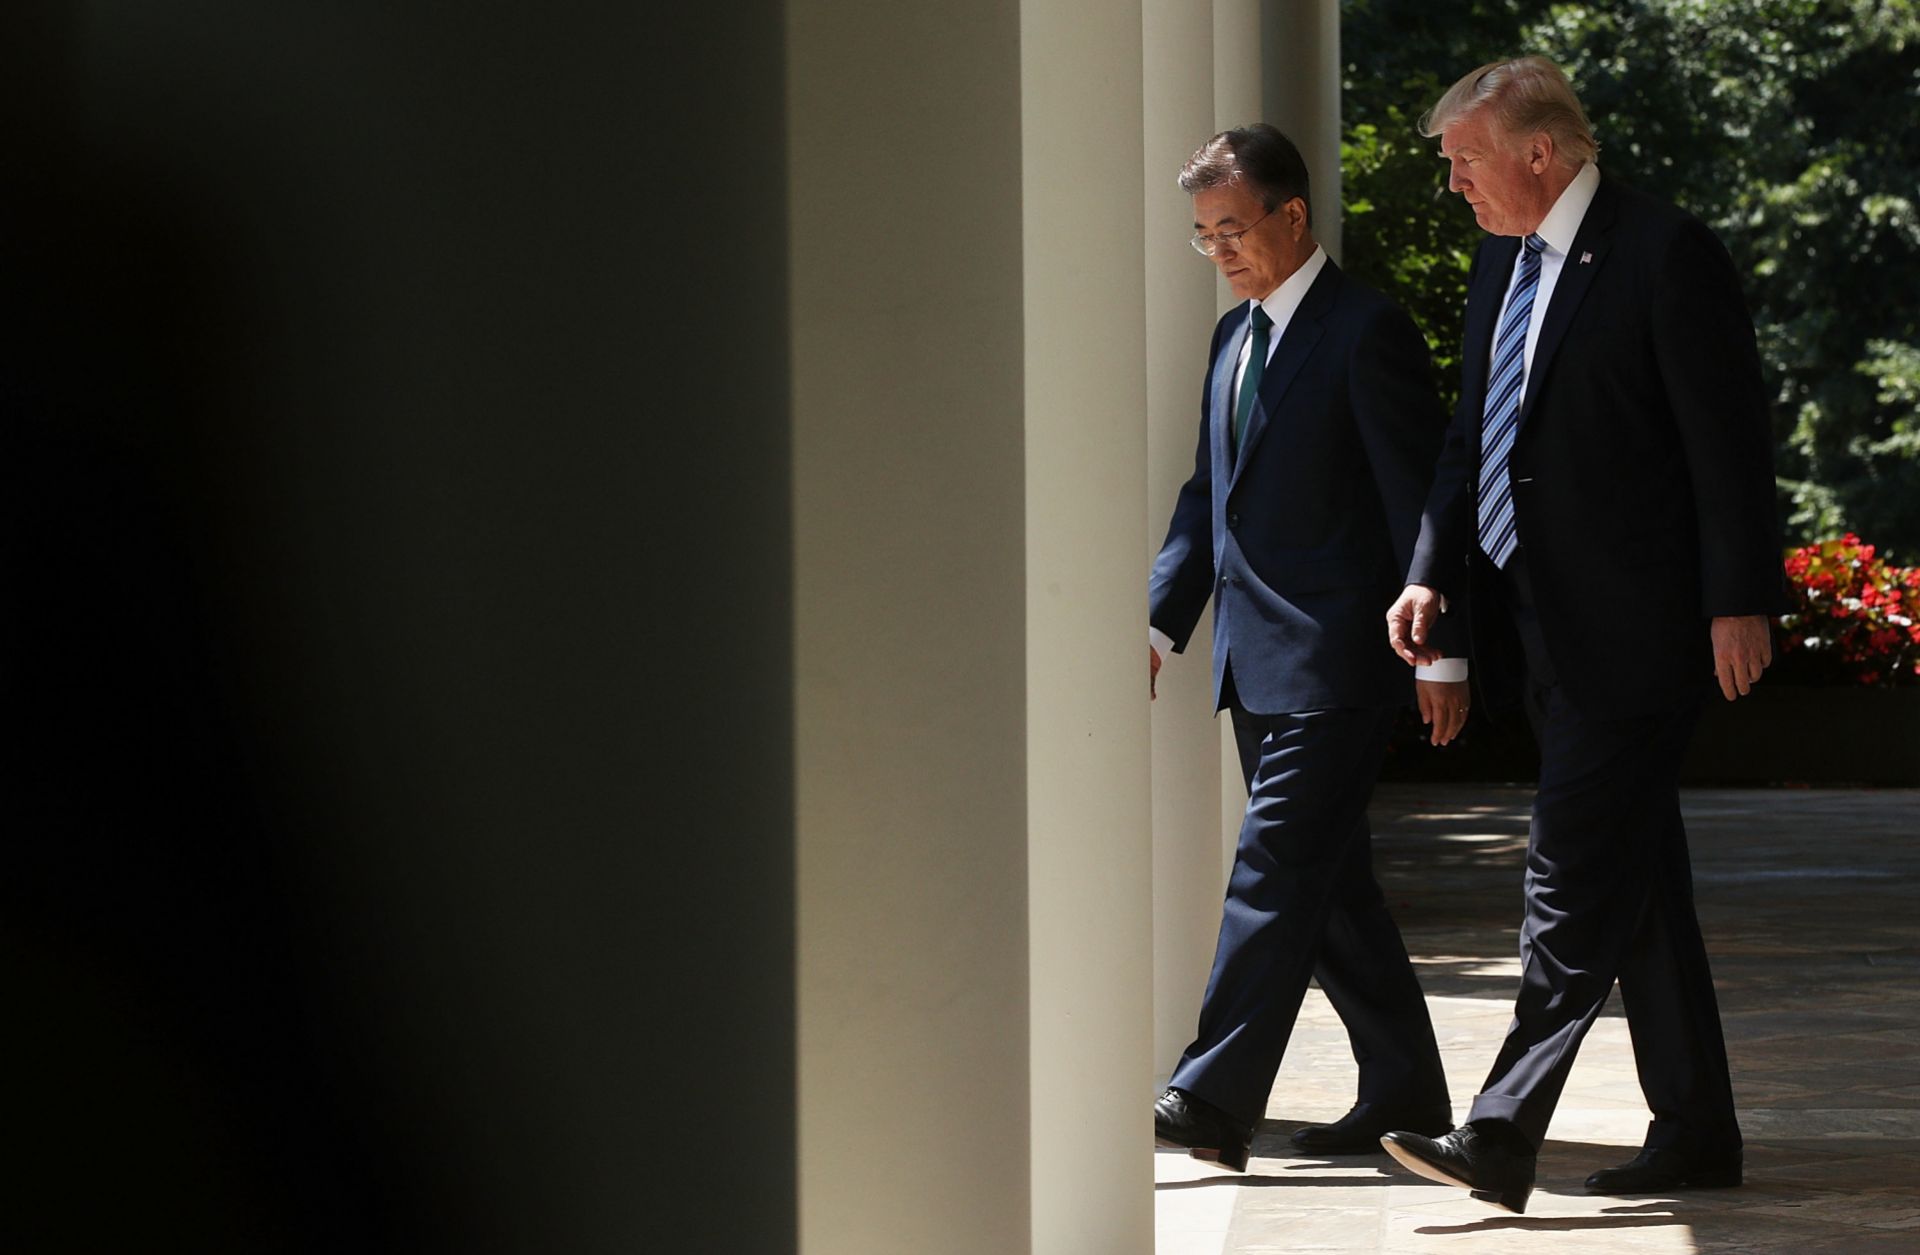 South Korean President Moon Jae In walks beside U.S. President Donald Trump at the White House in June 2017.